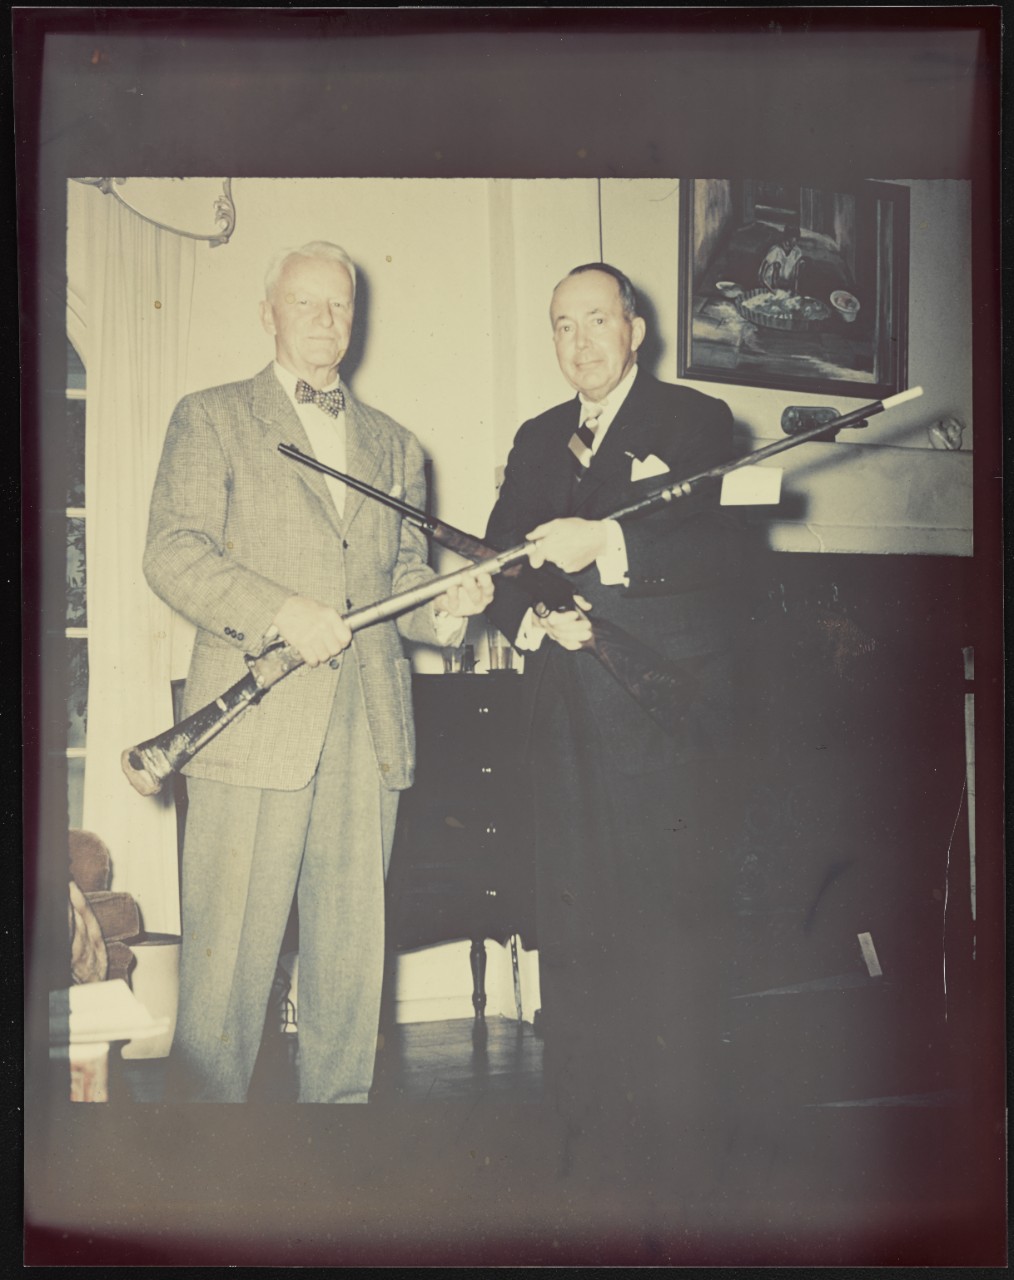 Nimitz and Siegmund with Guns